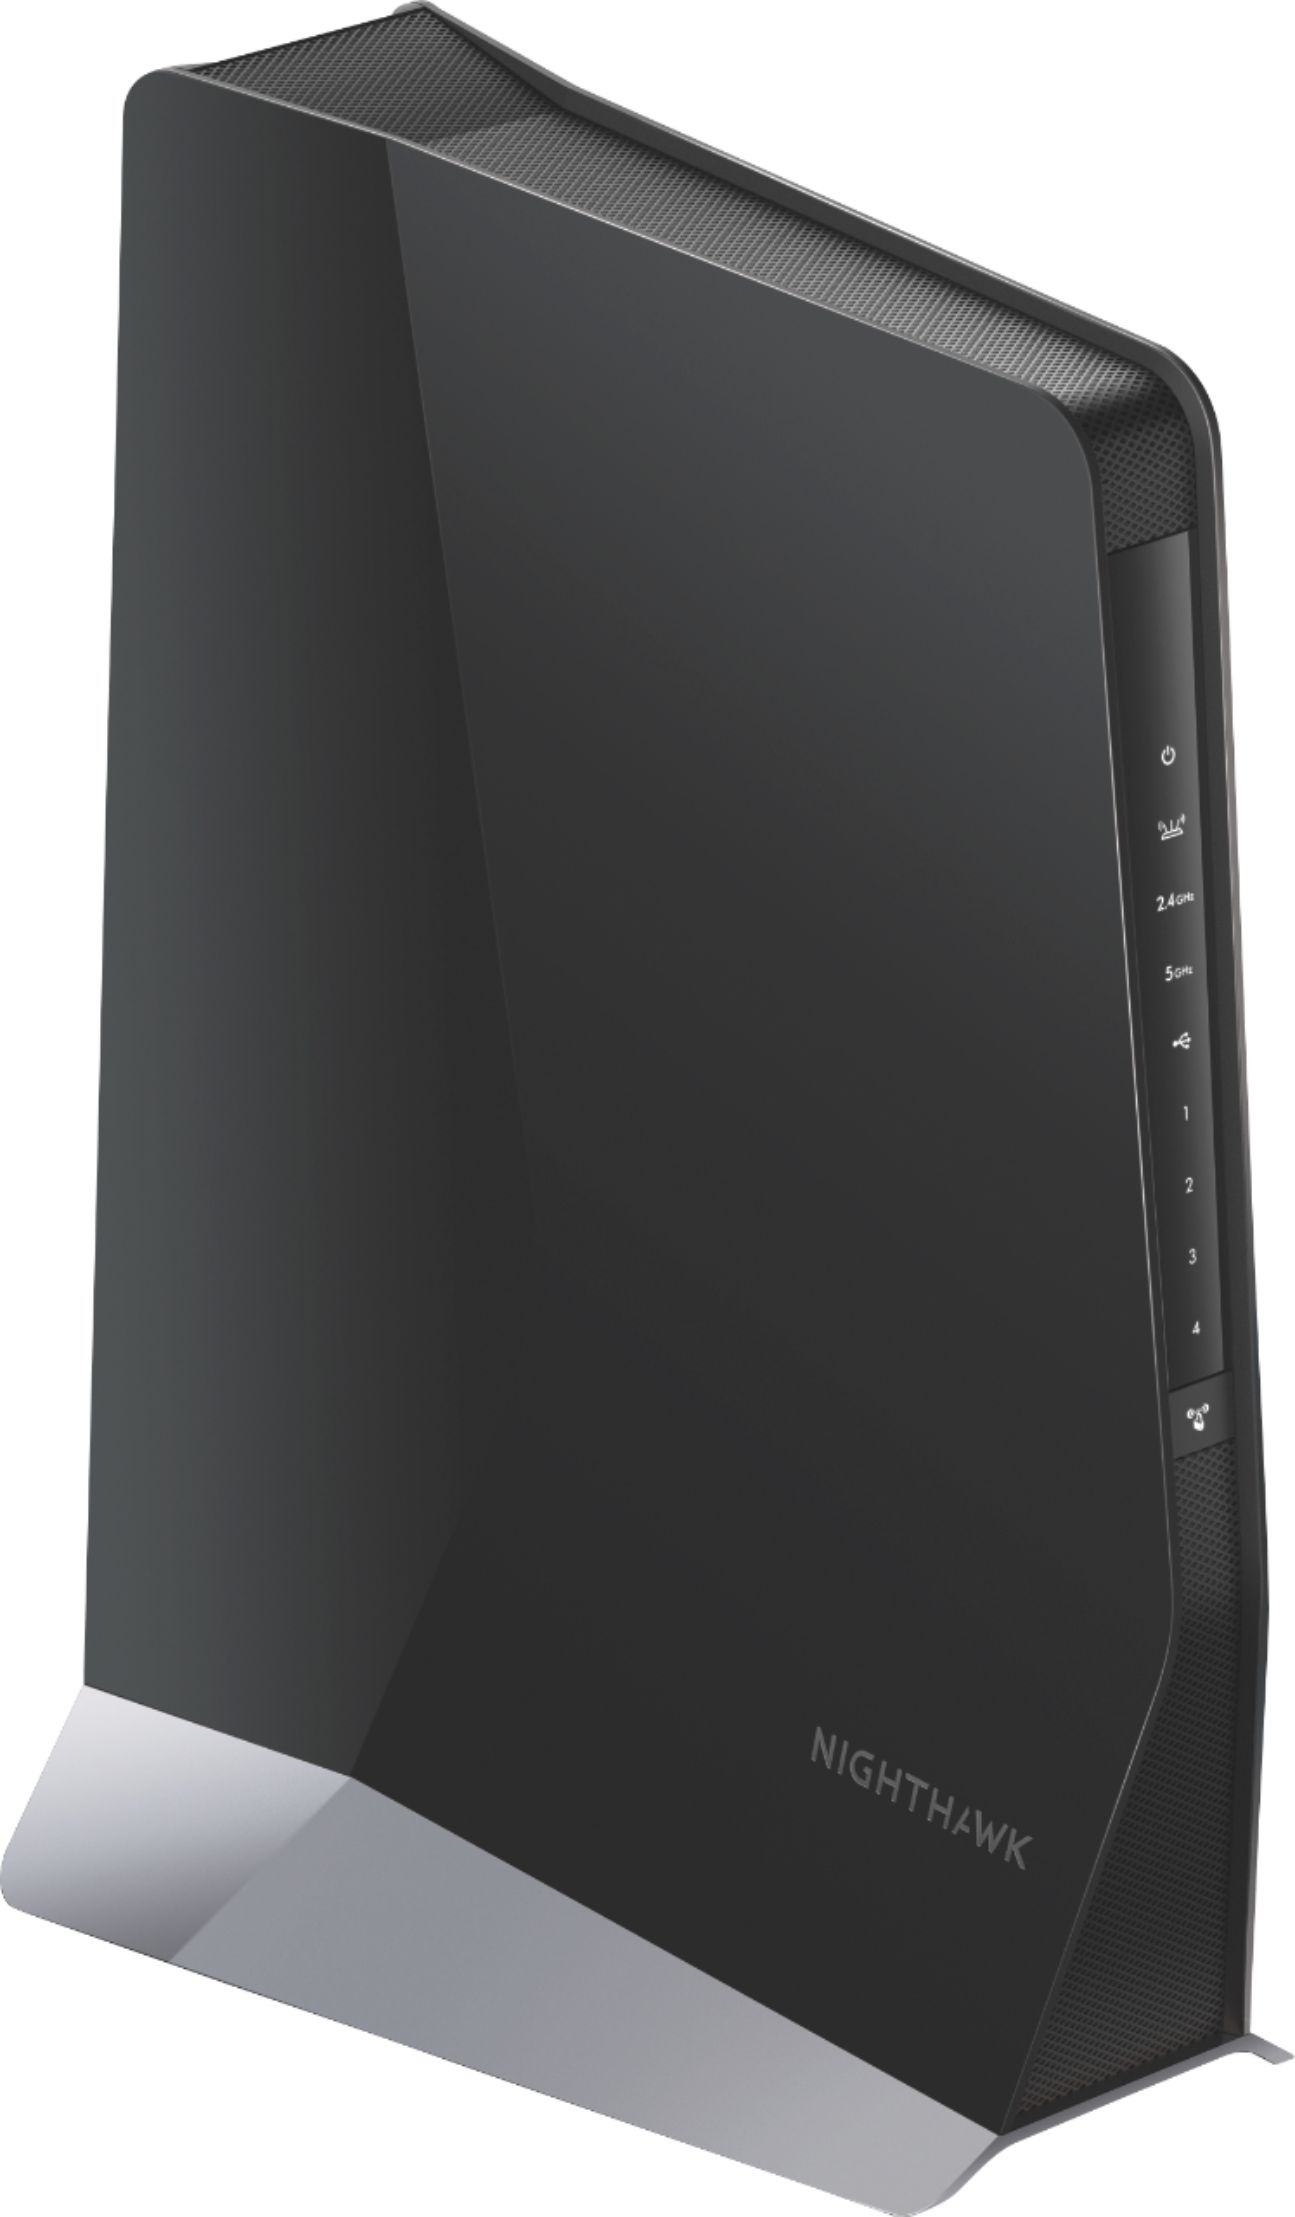 NETGEAR Universal Wi-Fi Range Extender with Ethernet  - Best Buy